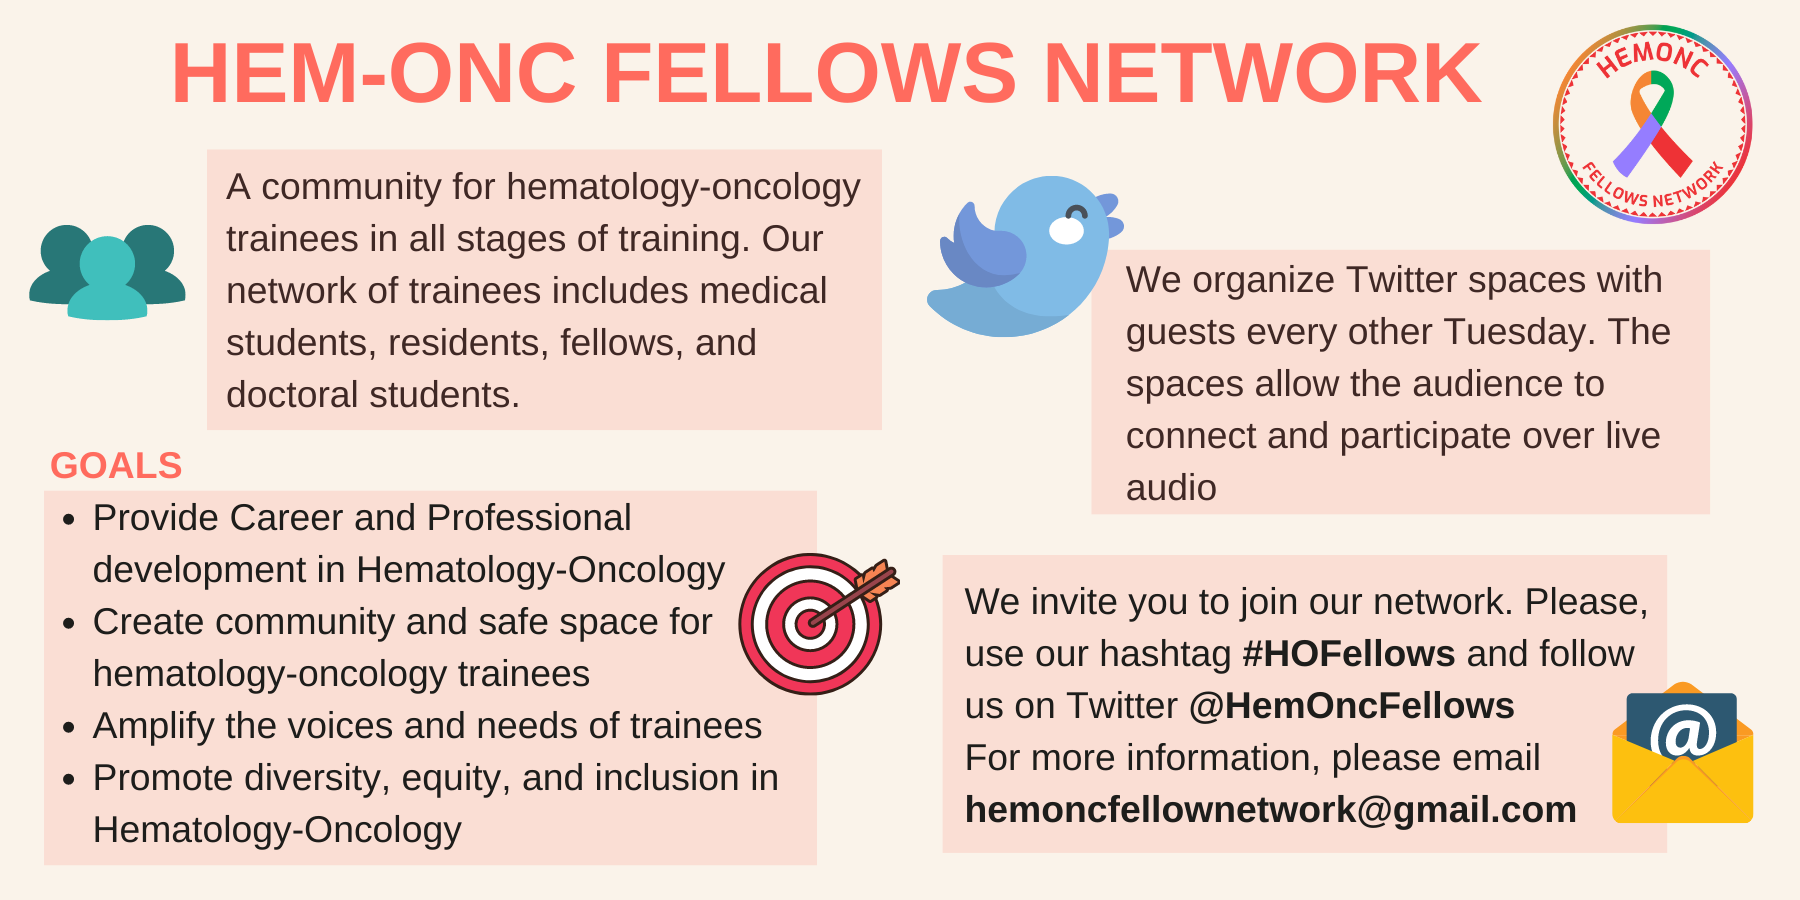 HemOnc Fellows Network Infographic